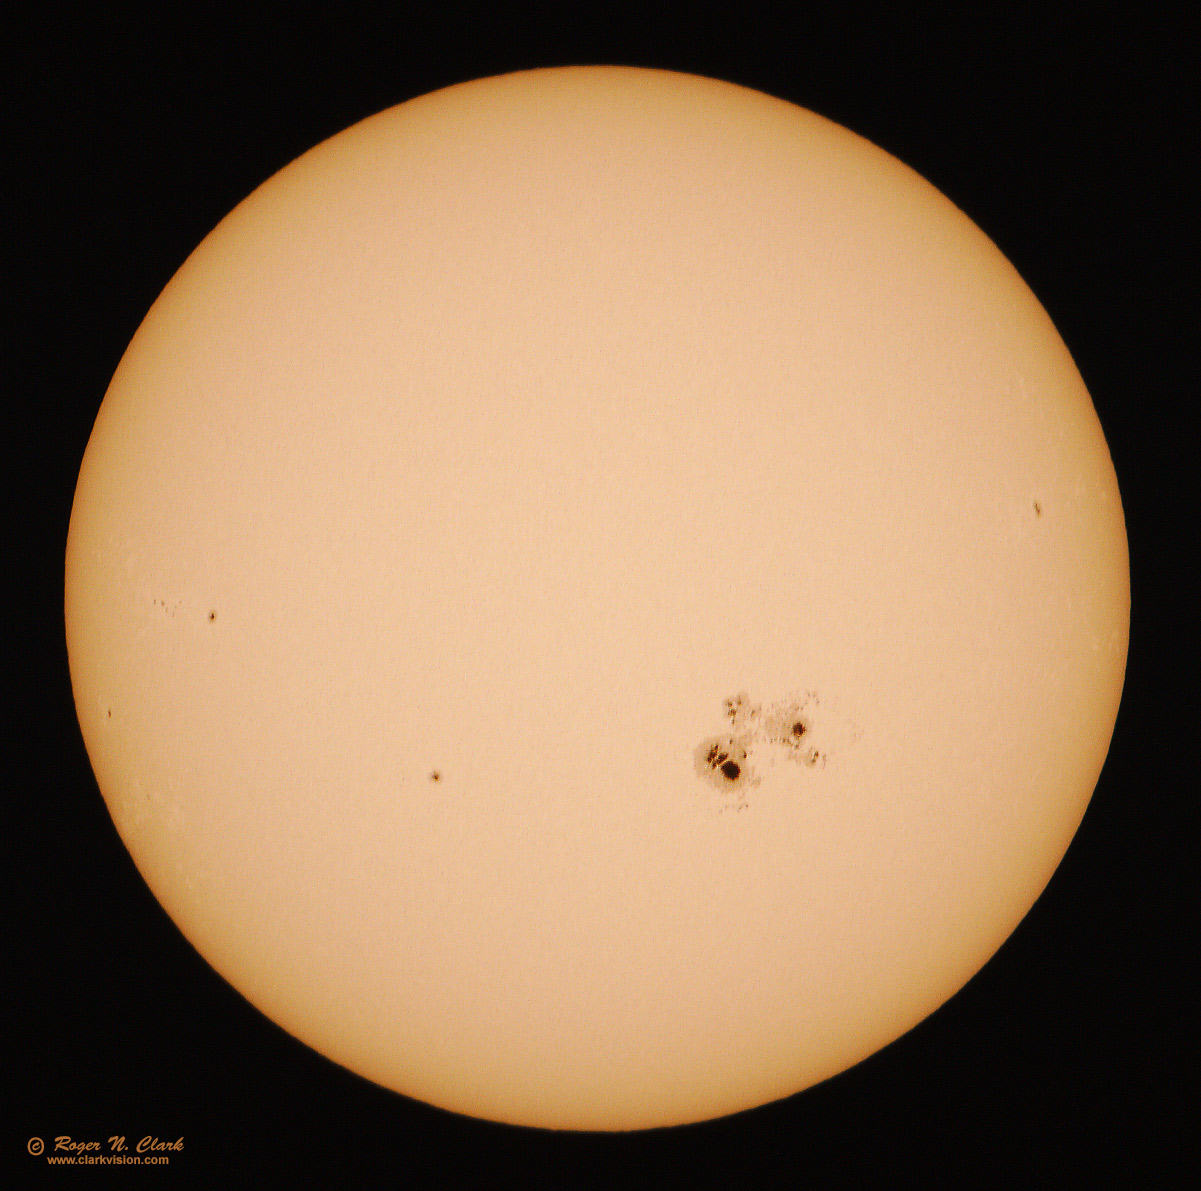 image sun.10.24.2014.IMG_2501+2.b-rl5x5-10-rl3x3-50.c-bin2x2s.jpg is Copyrighted by Roger N. Clark, www.clarkvision.com